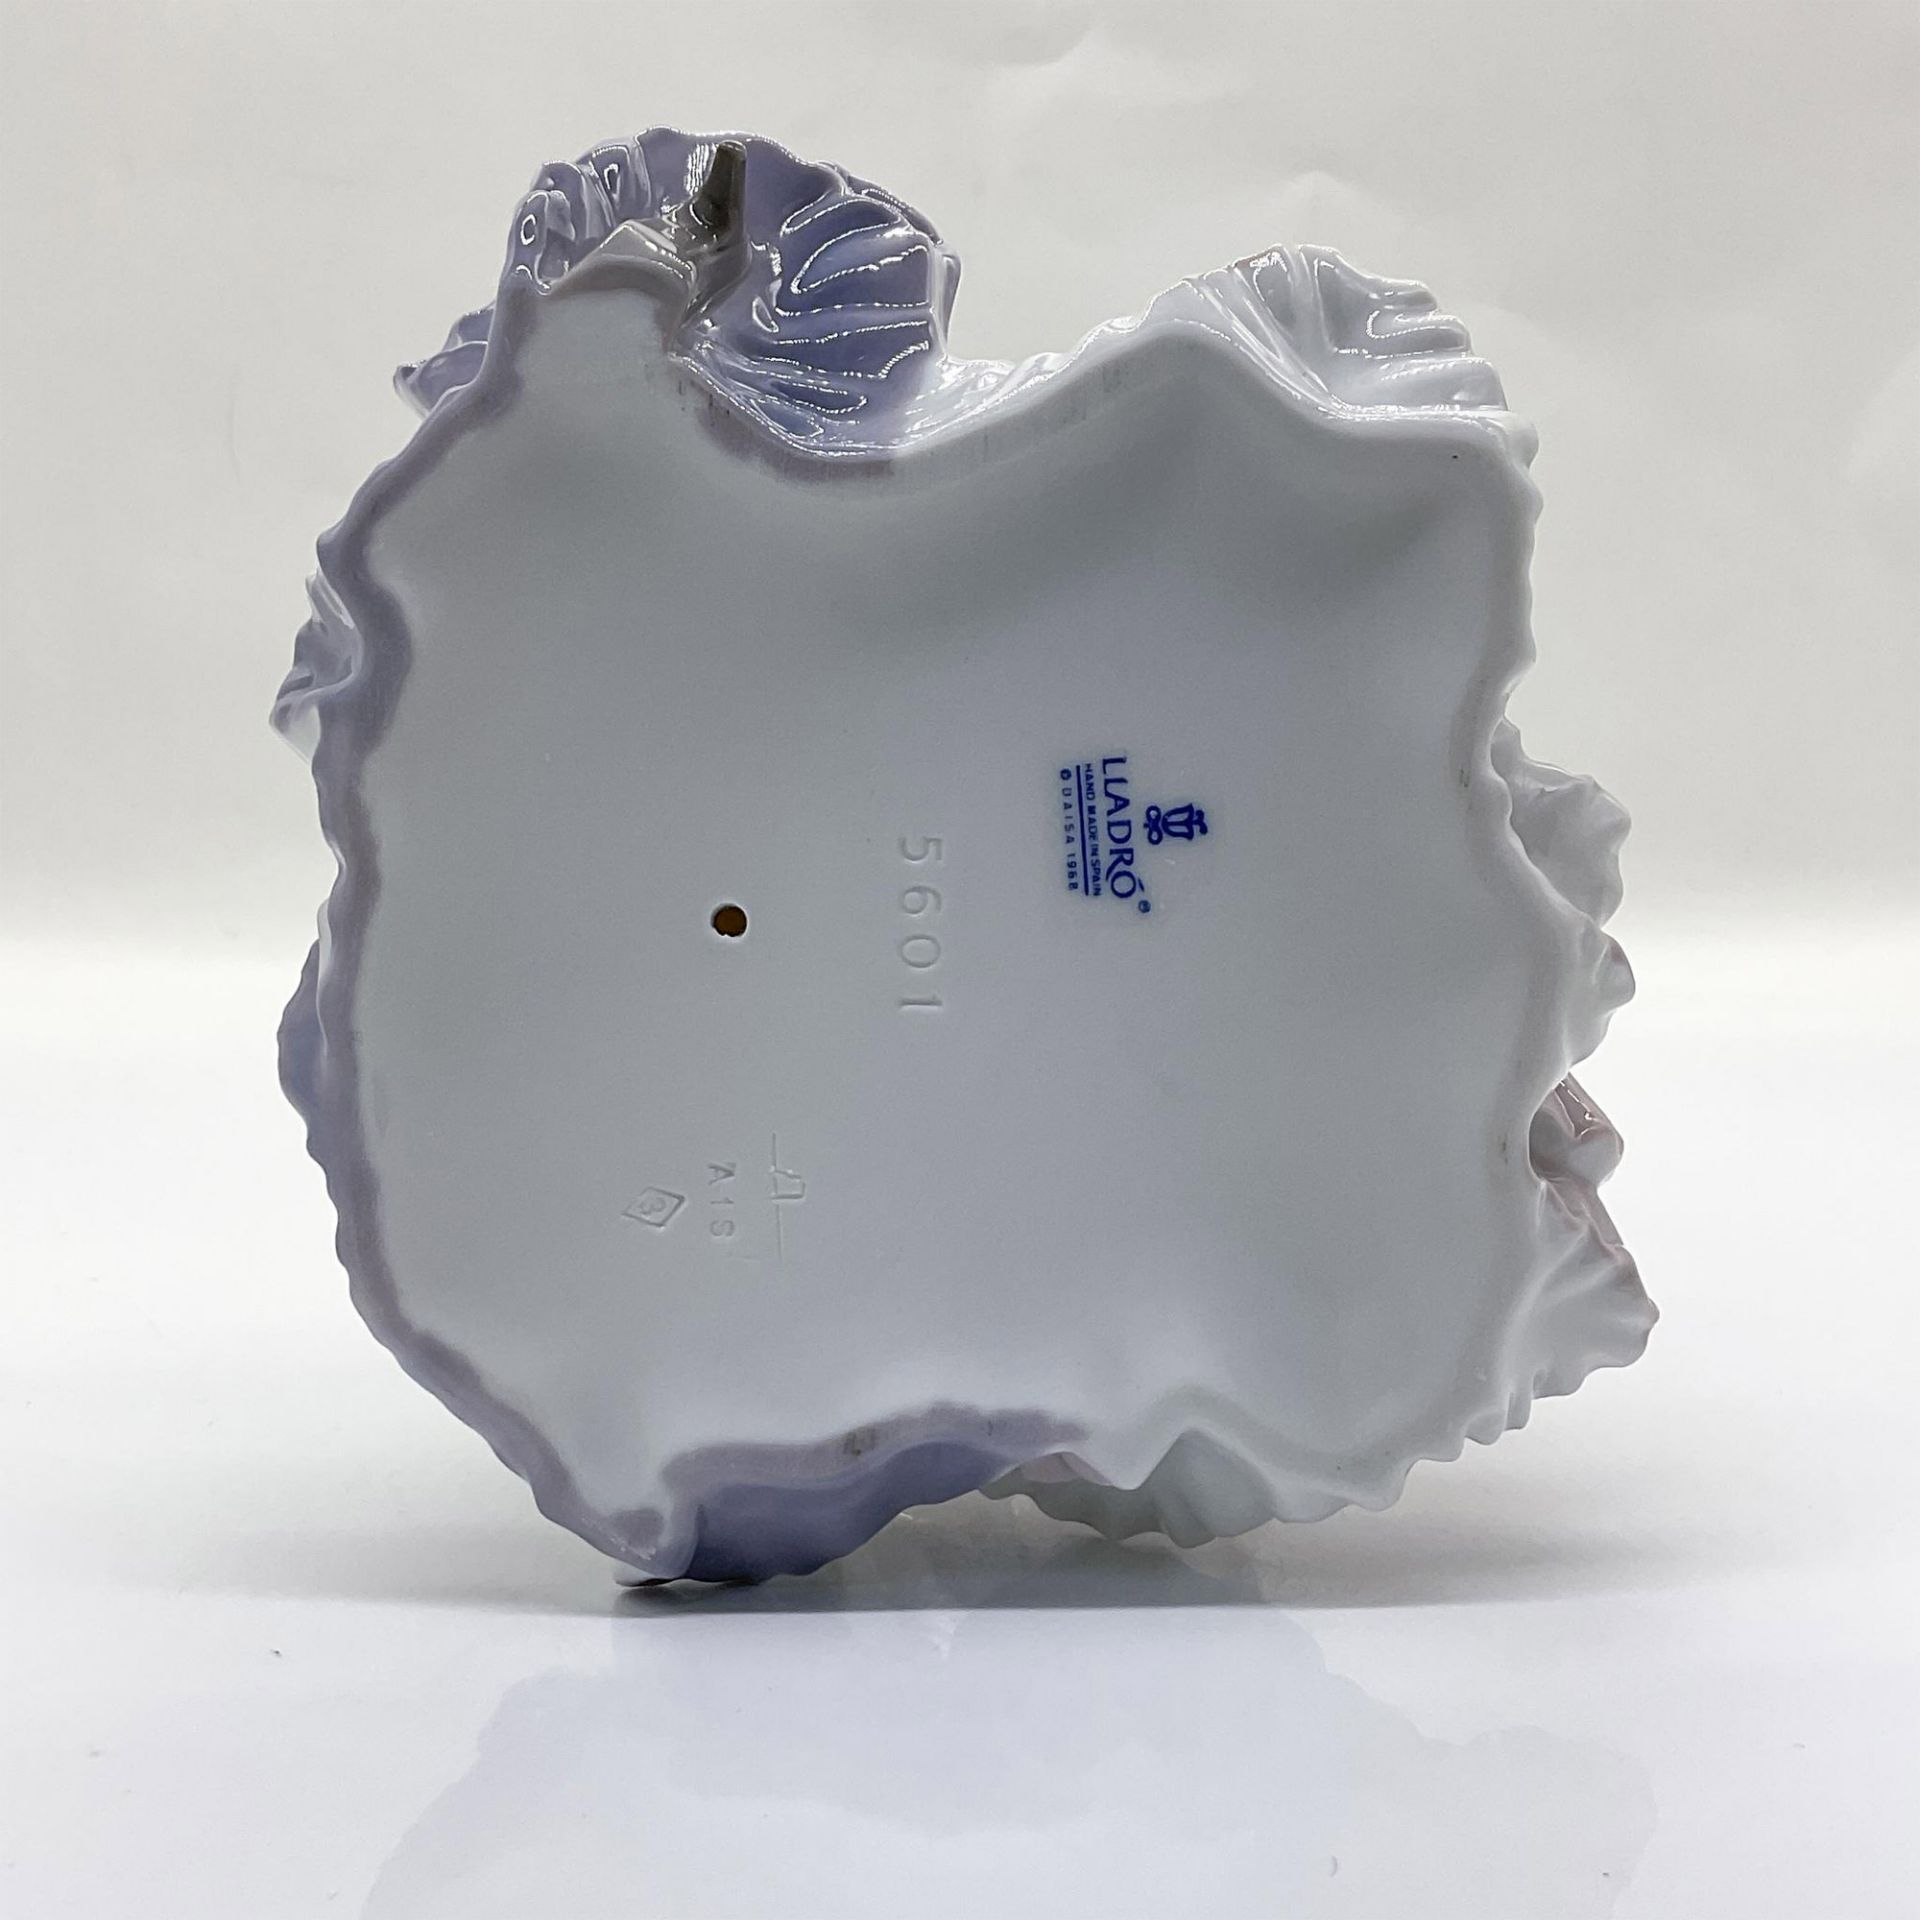 Ole 1005601 - Lladro Porcelain Figurine - Bild 3 aus 3